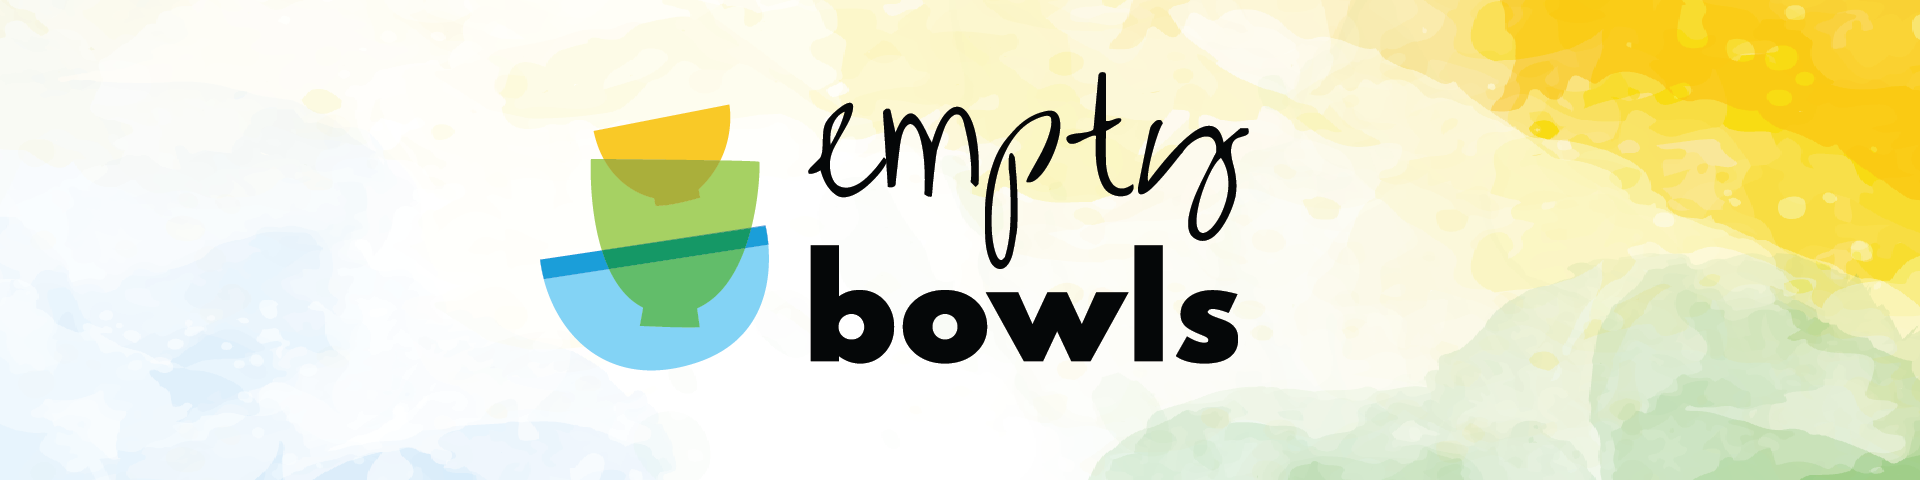 Empty Bowls banner